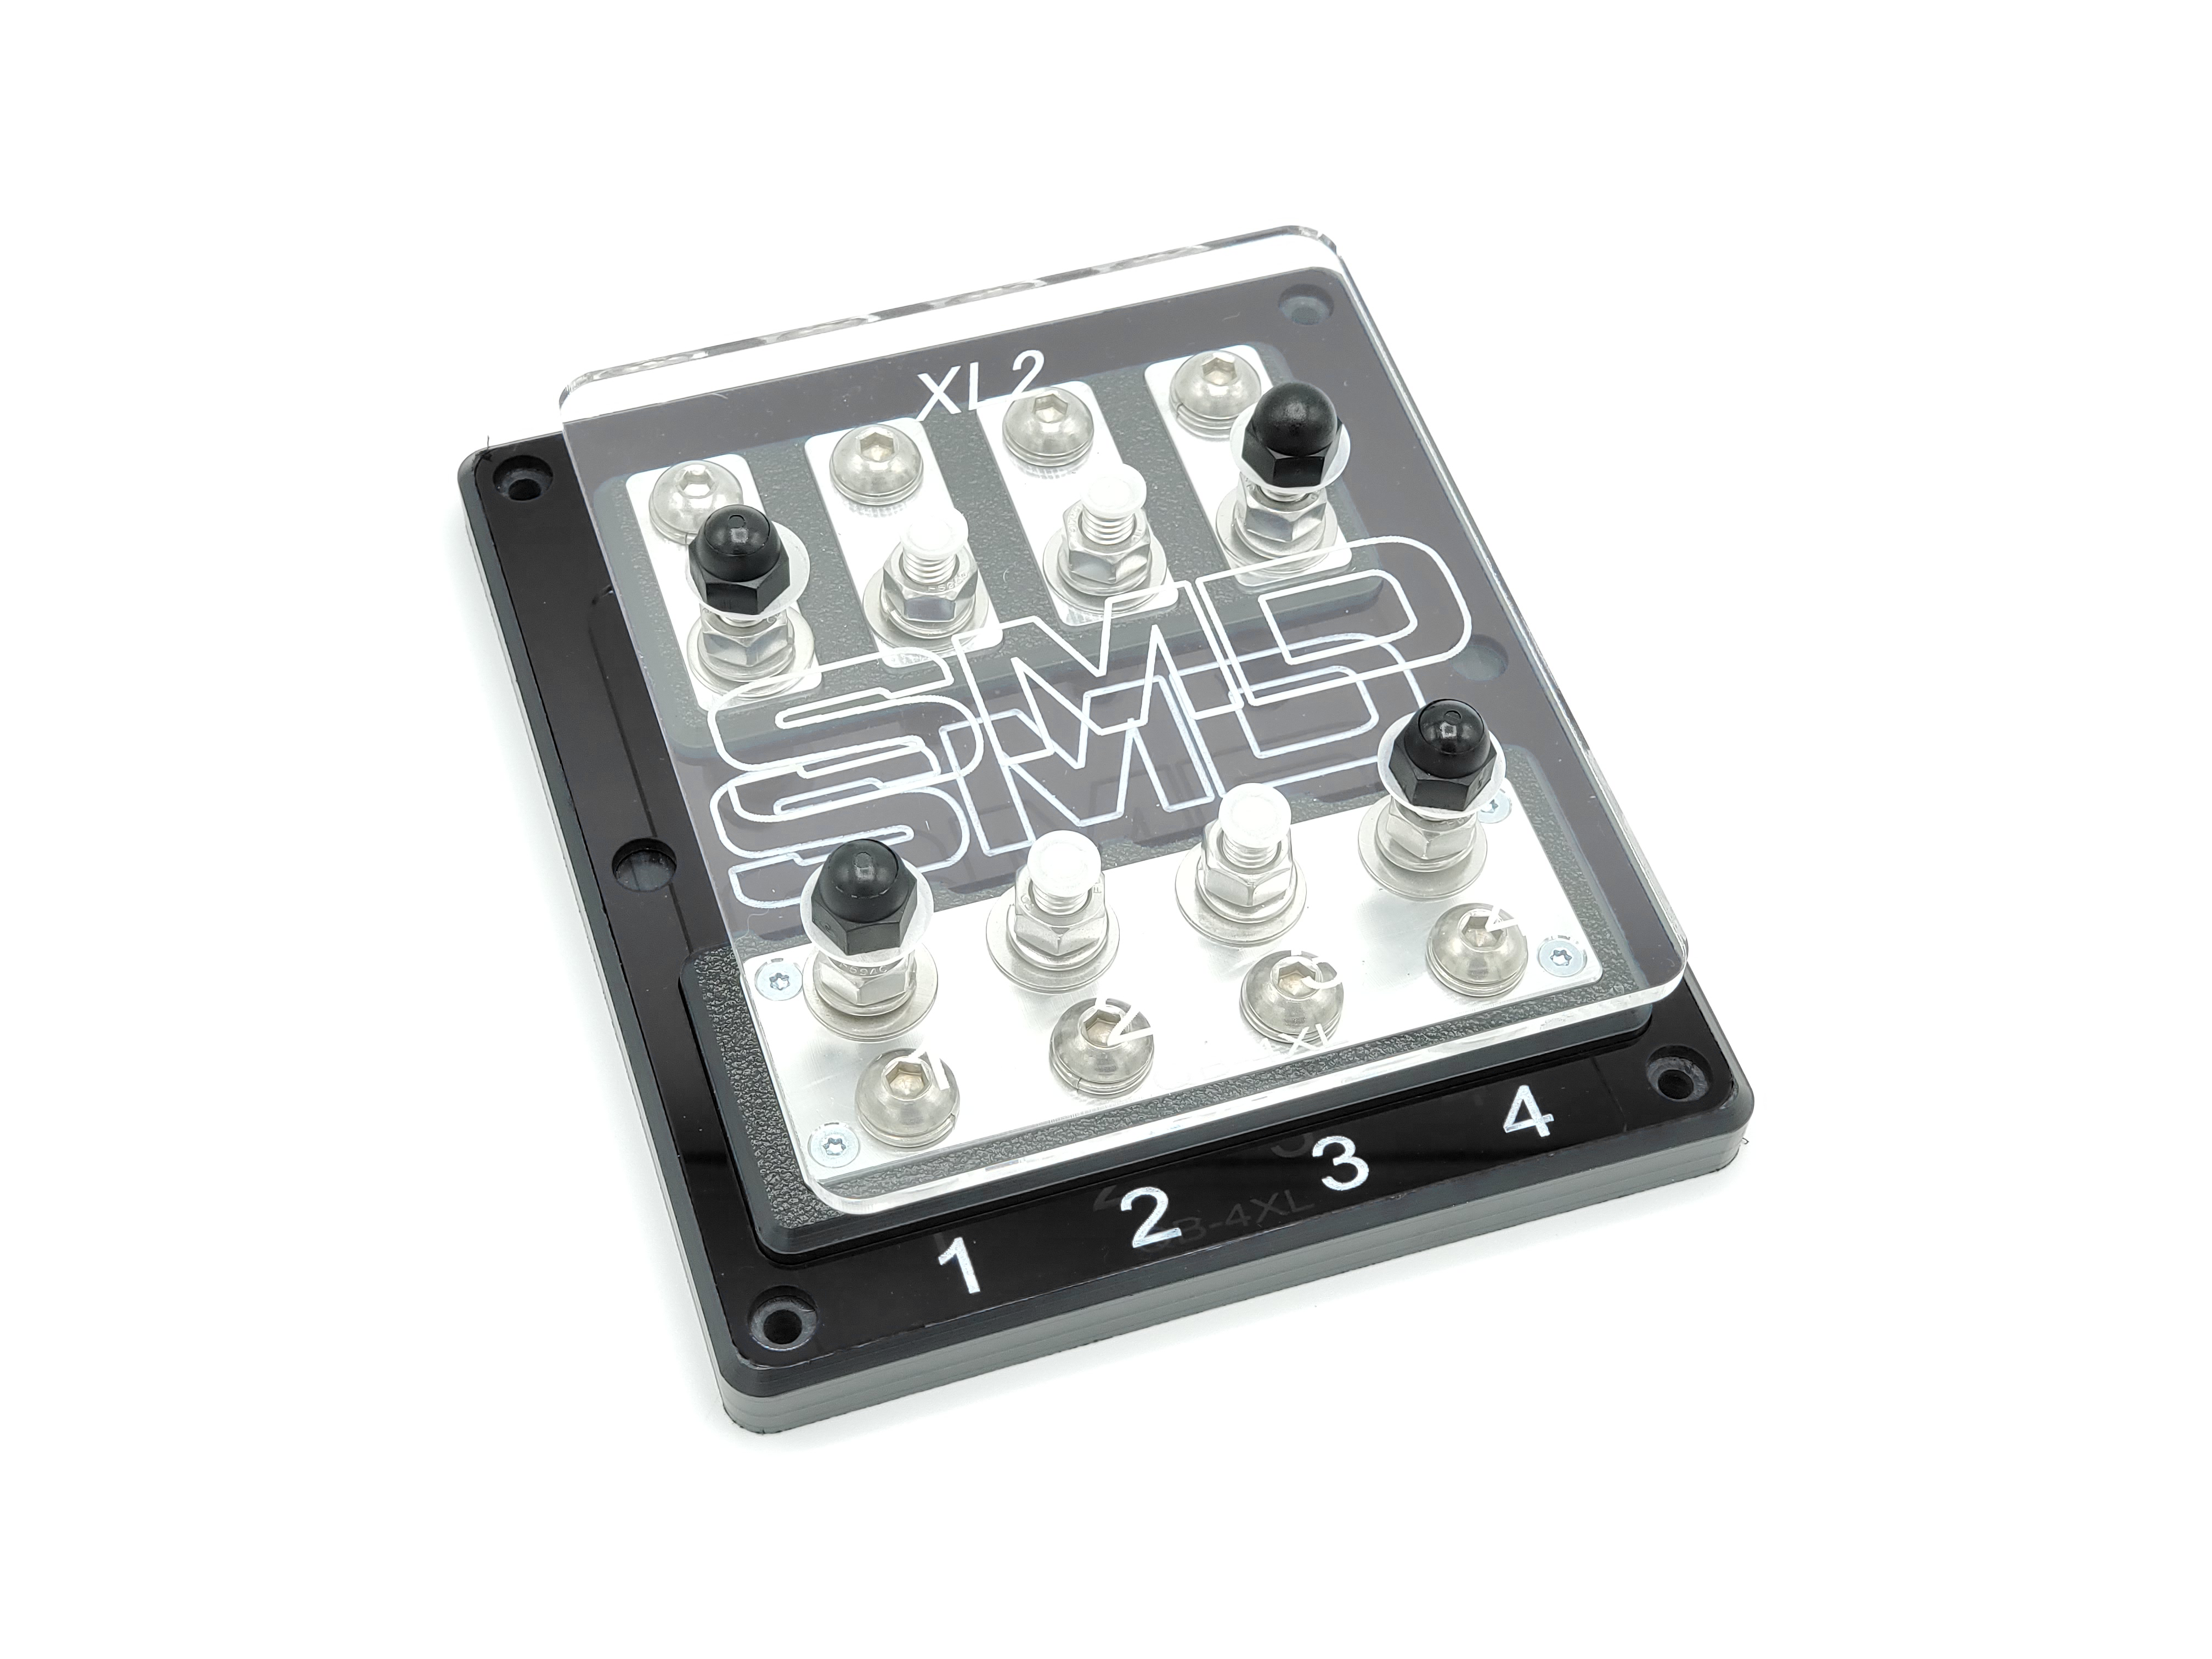 SMD Quad XL2 4-Spot ANL Fuse Block - Steve Meade Designs